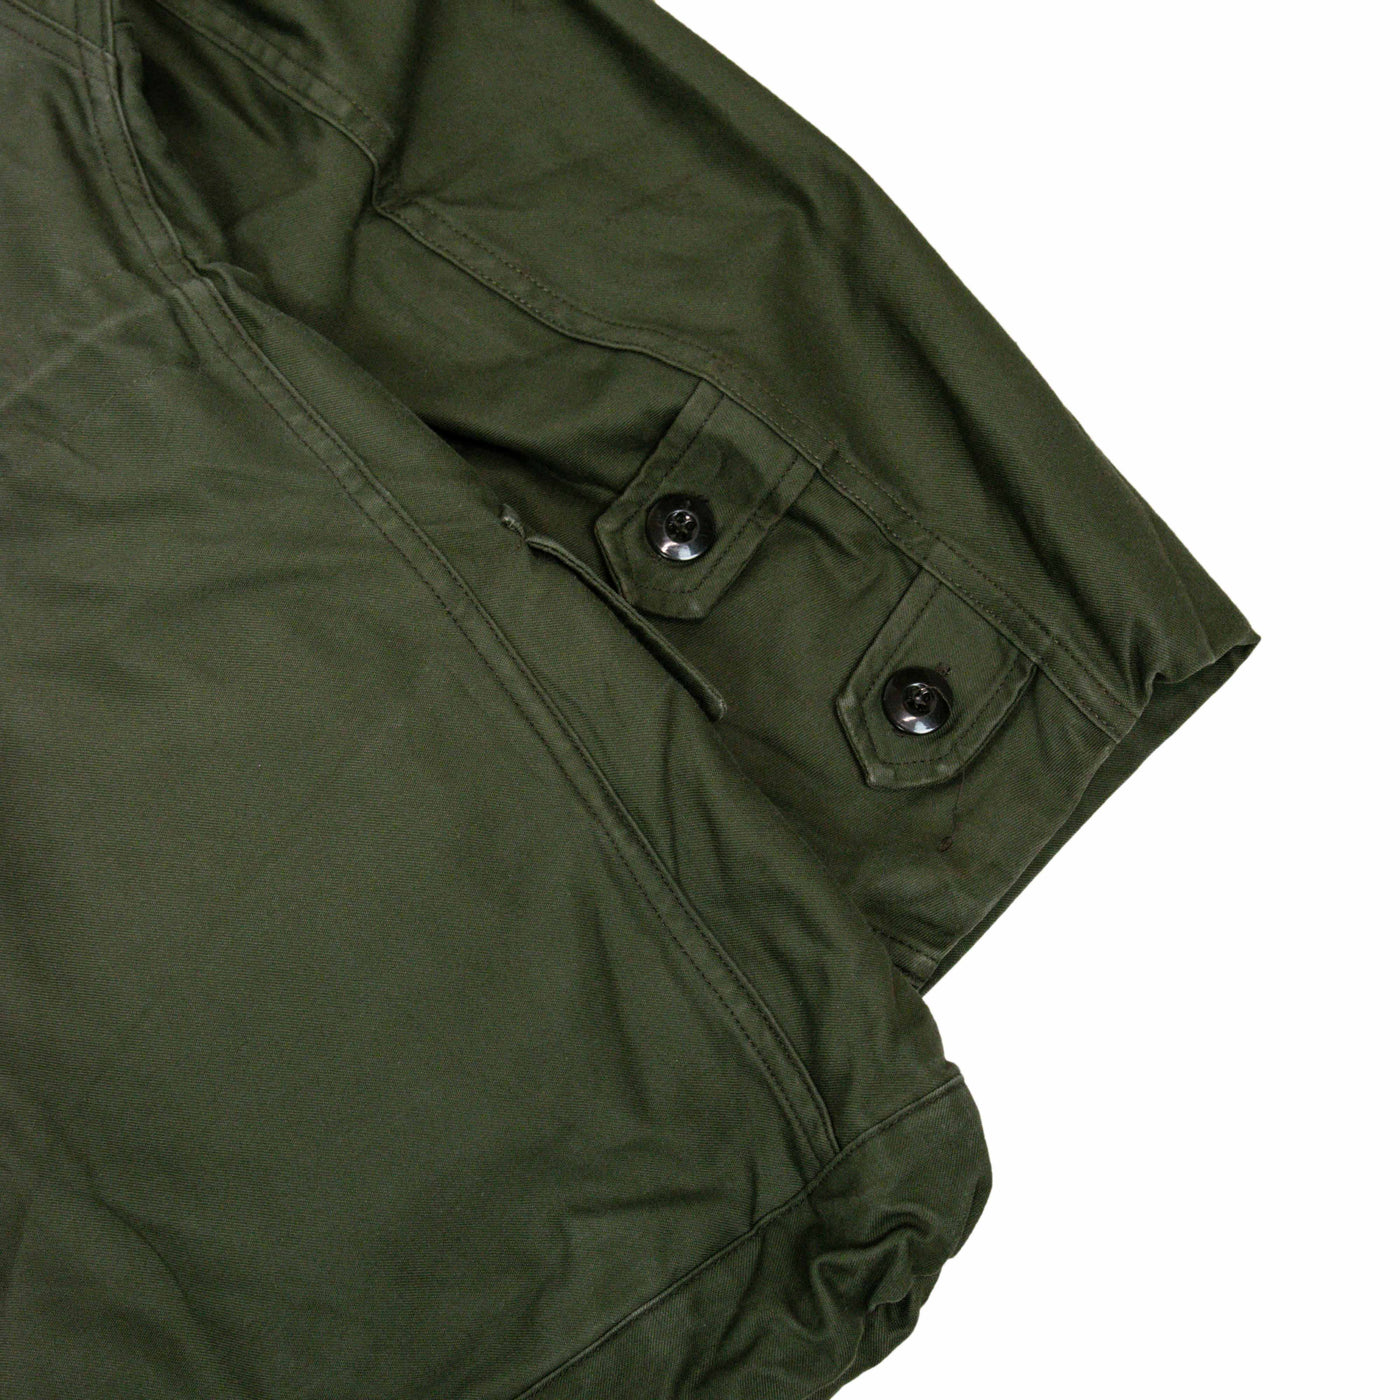 Vintage 80s Seyntex Green Dutch Army Cotton Military Field Jacket Small